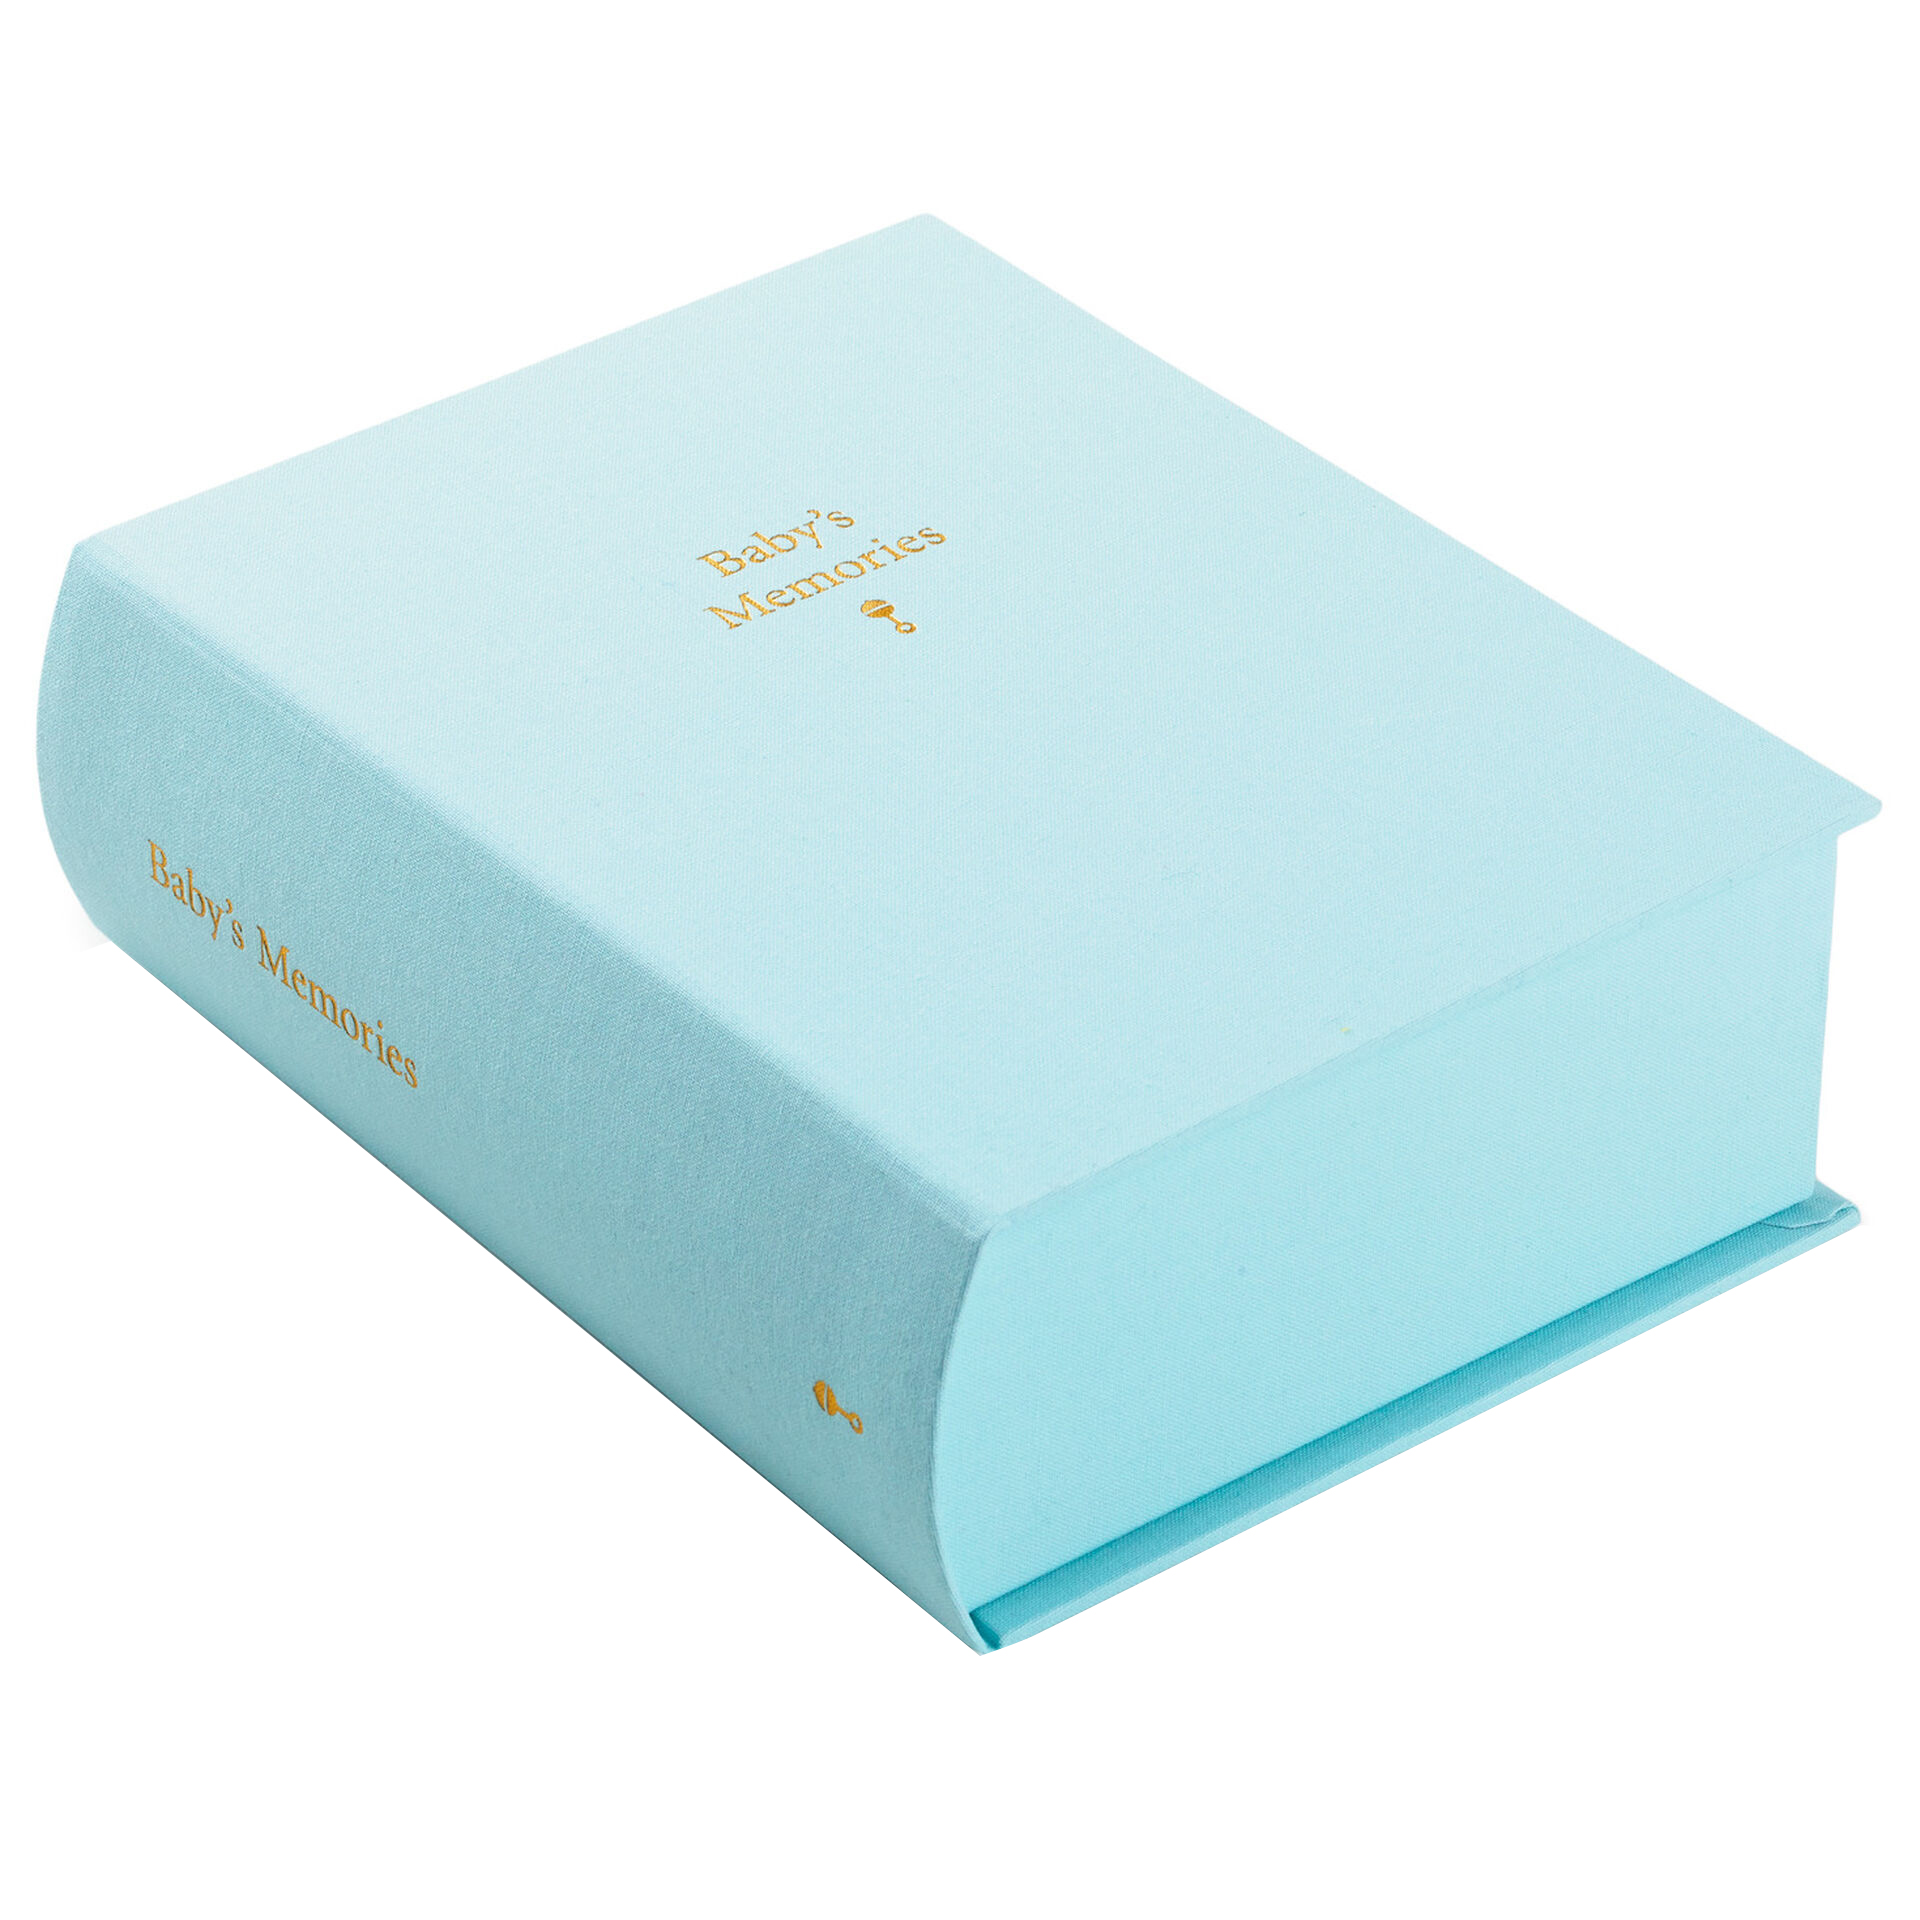 Wholesale custom printed luxury wedding gift box memory box